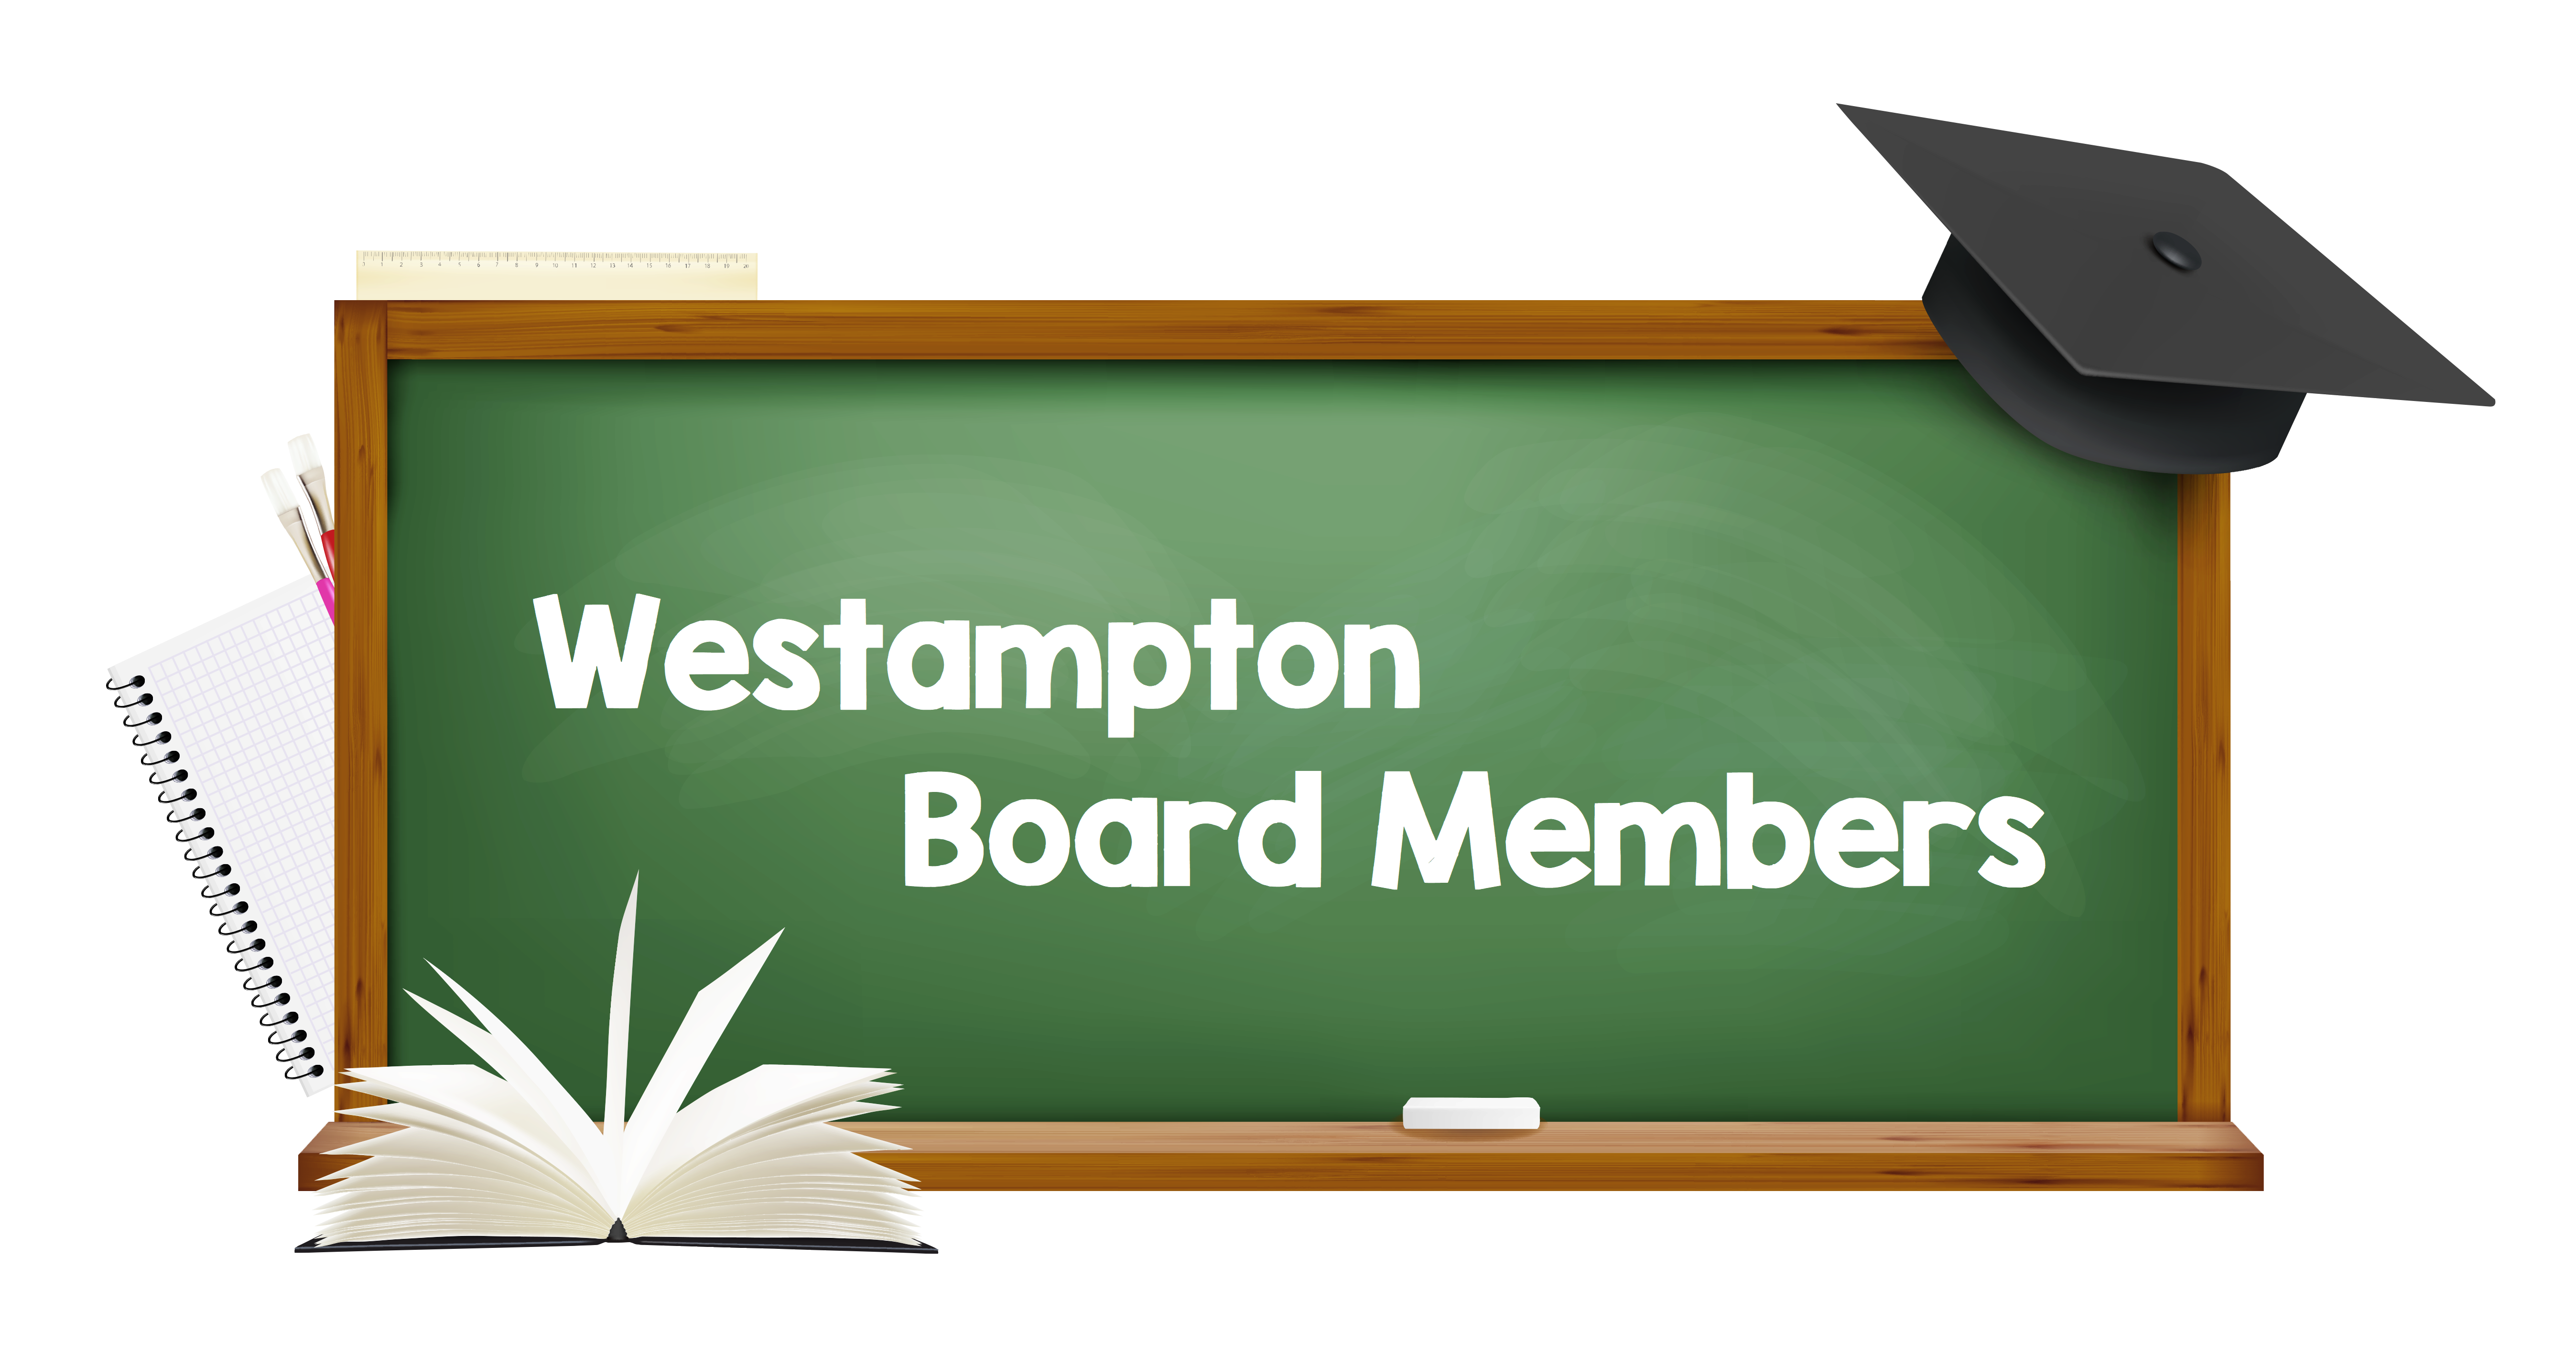 westampton board members chalkboard  image